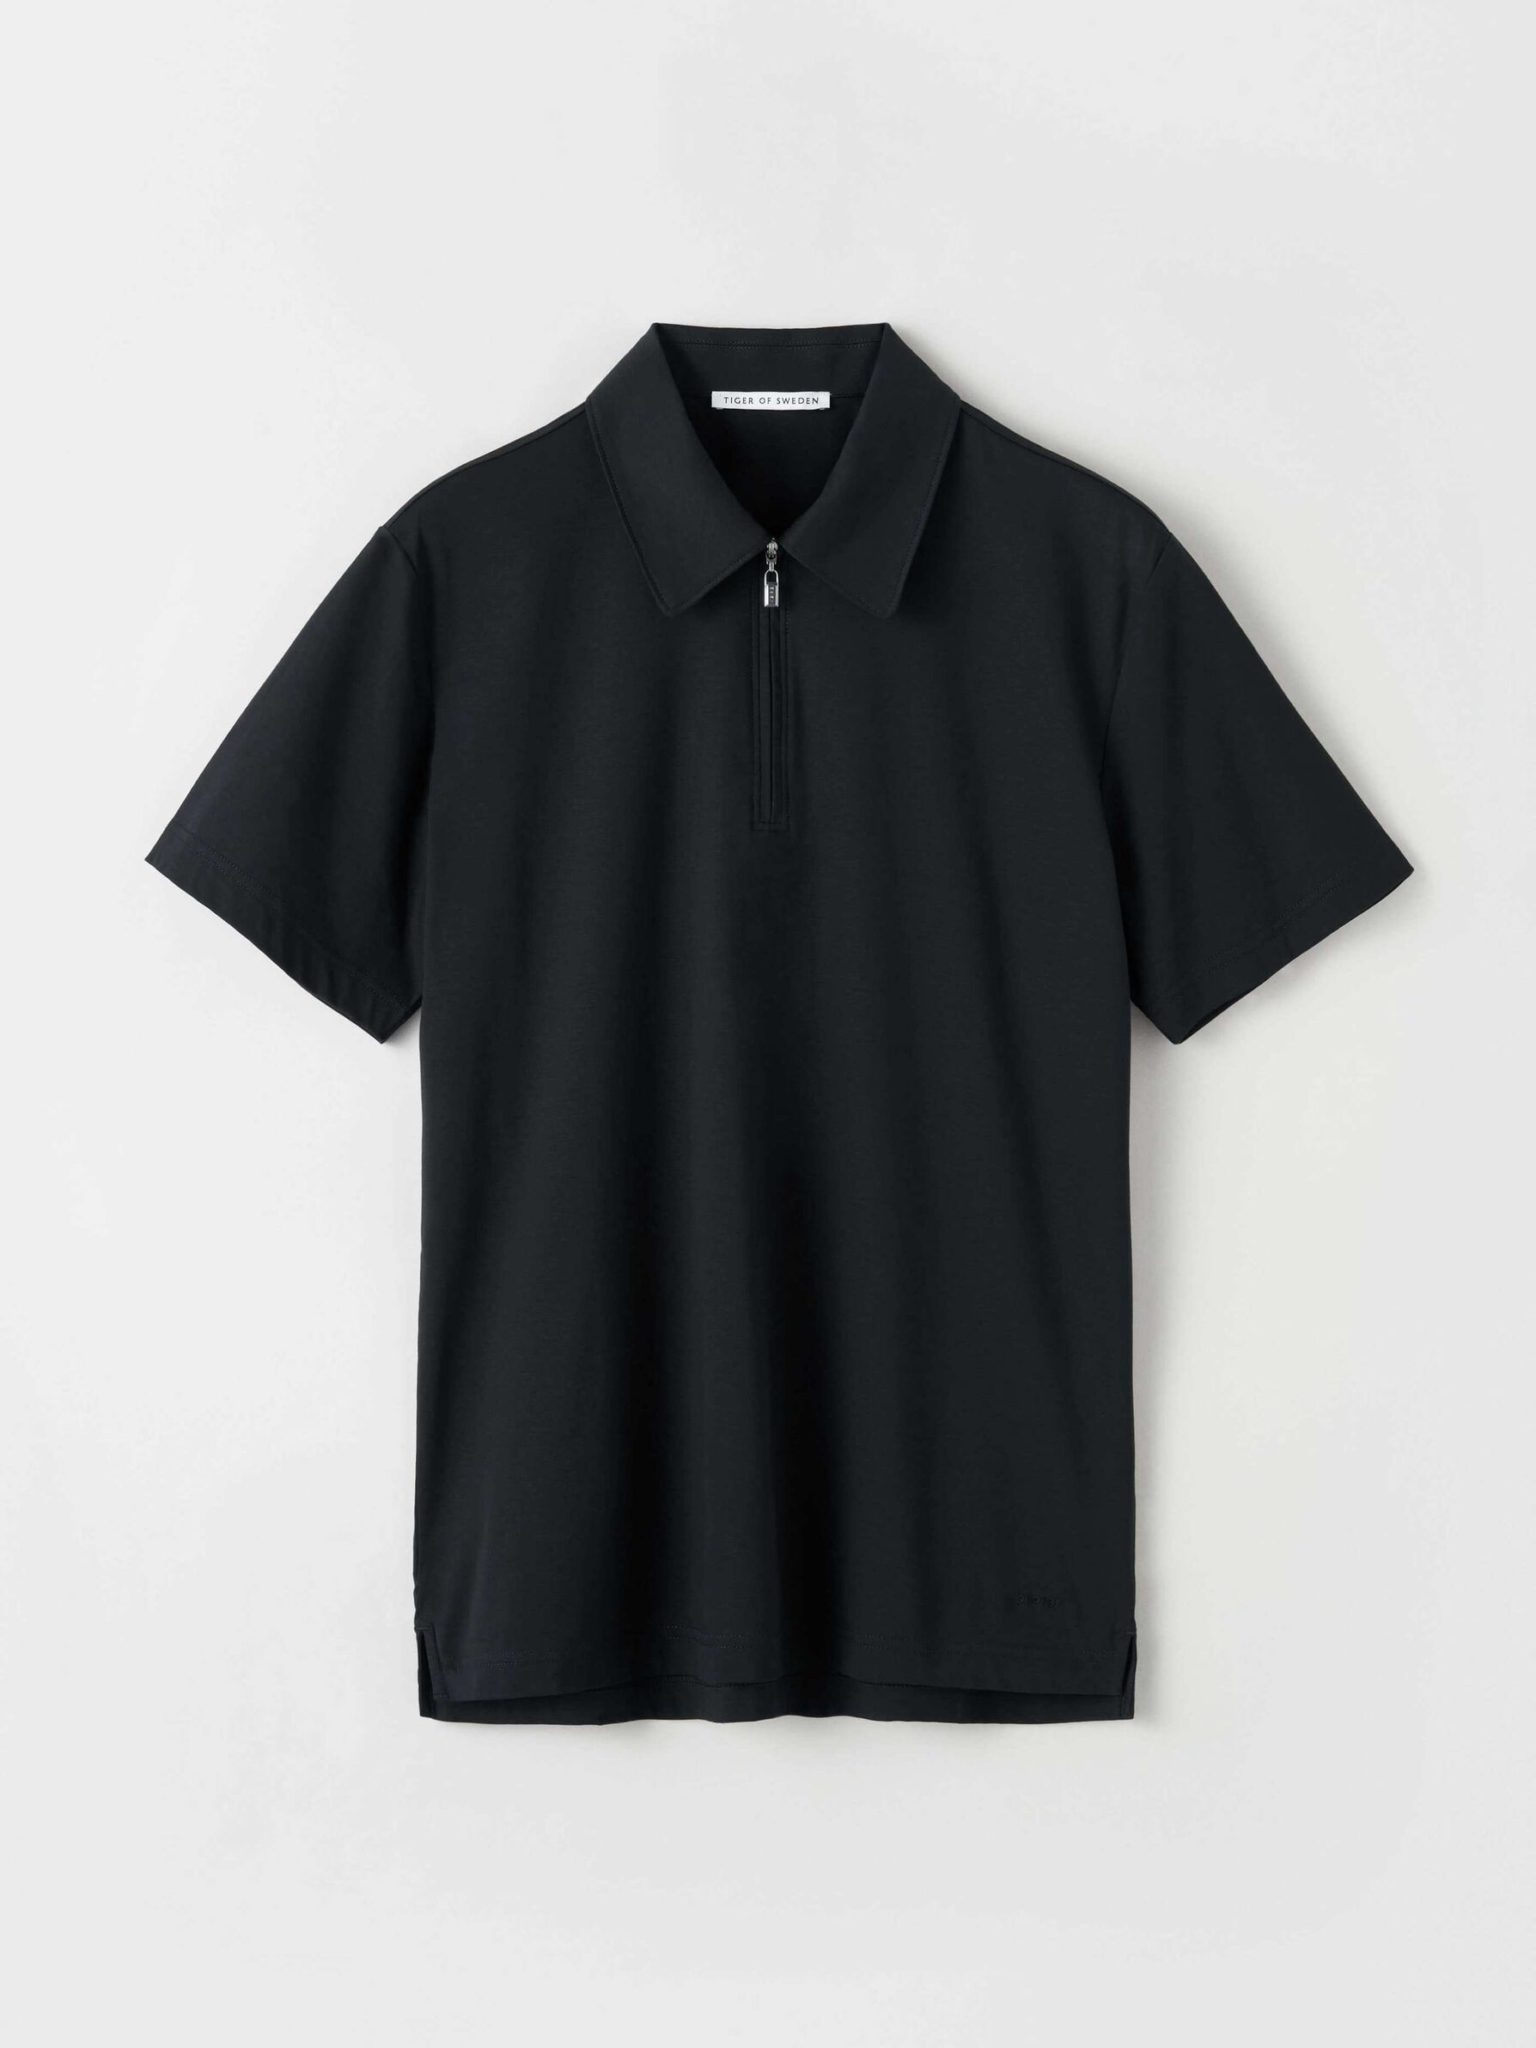 Buy Tiger of Sweden Laron Polo Shirt Black - Scandinavian Fashion Store